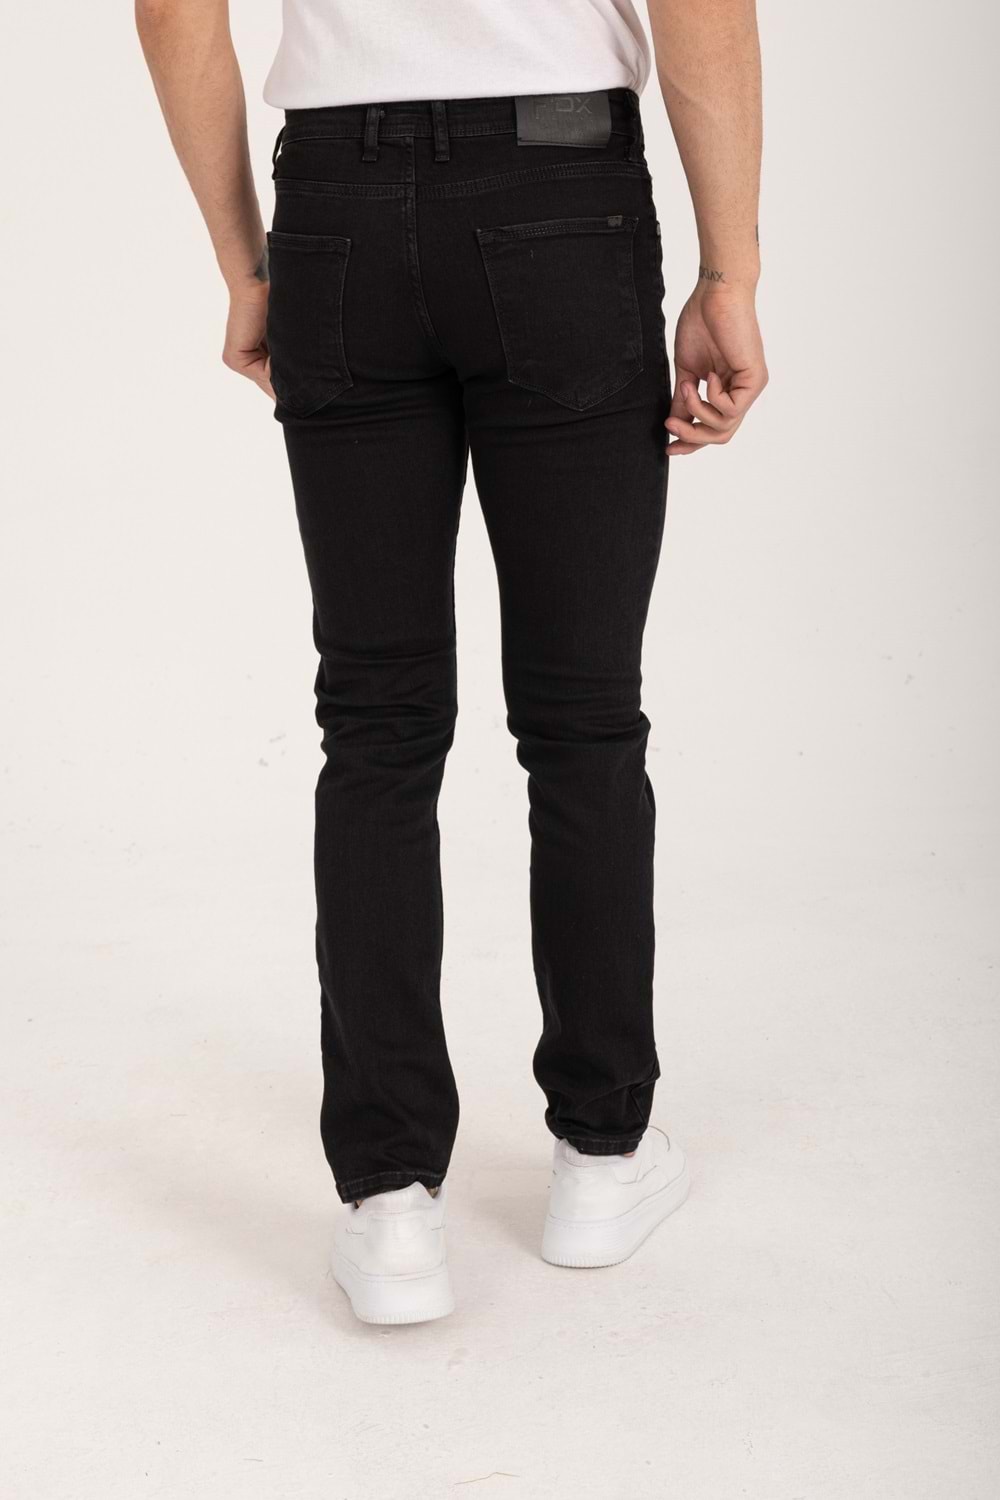 Fdx Jeans Siyah Regular Fit Erkek Kot Pantolon